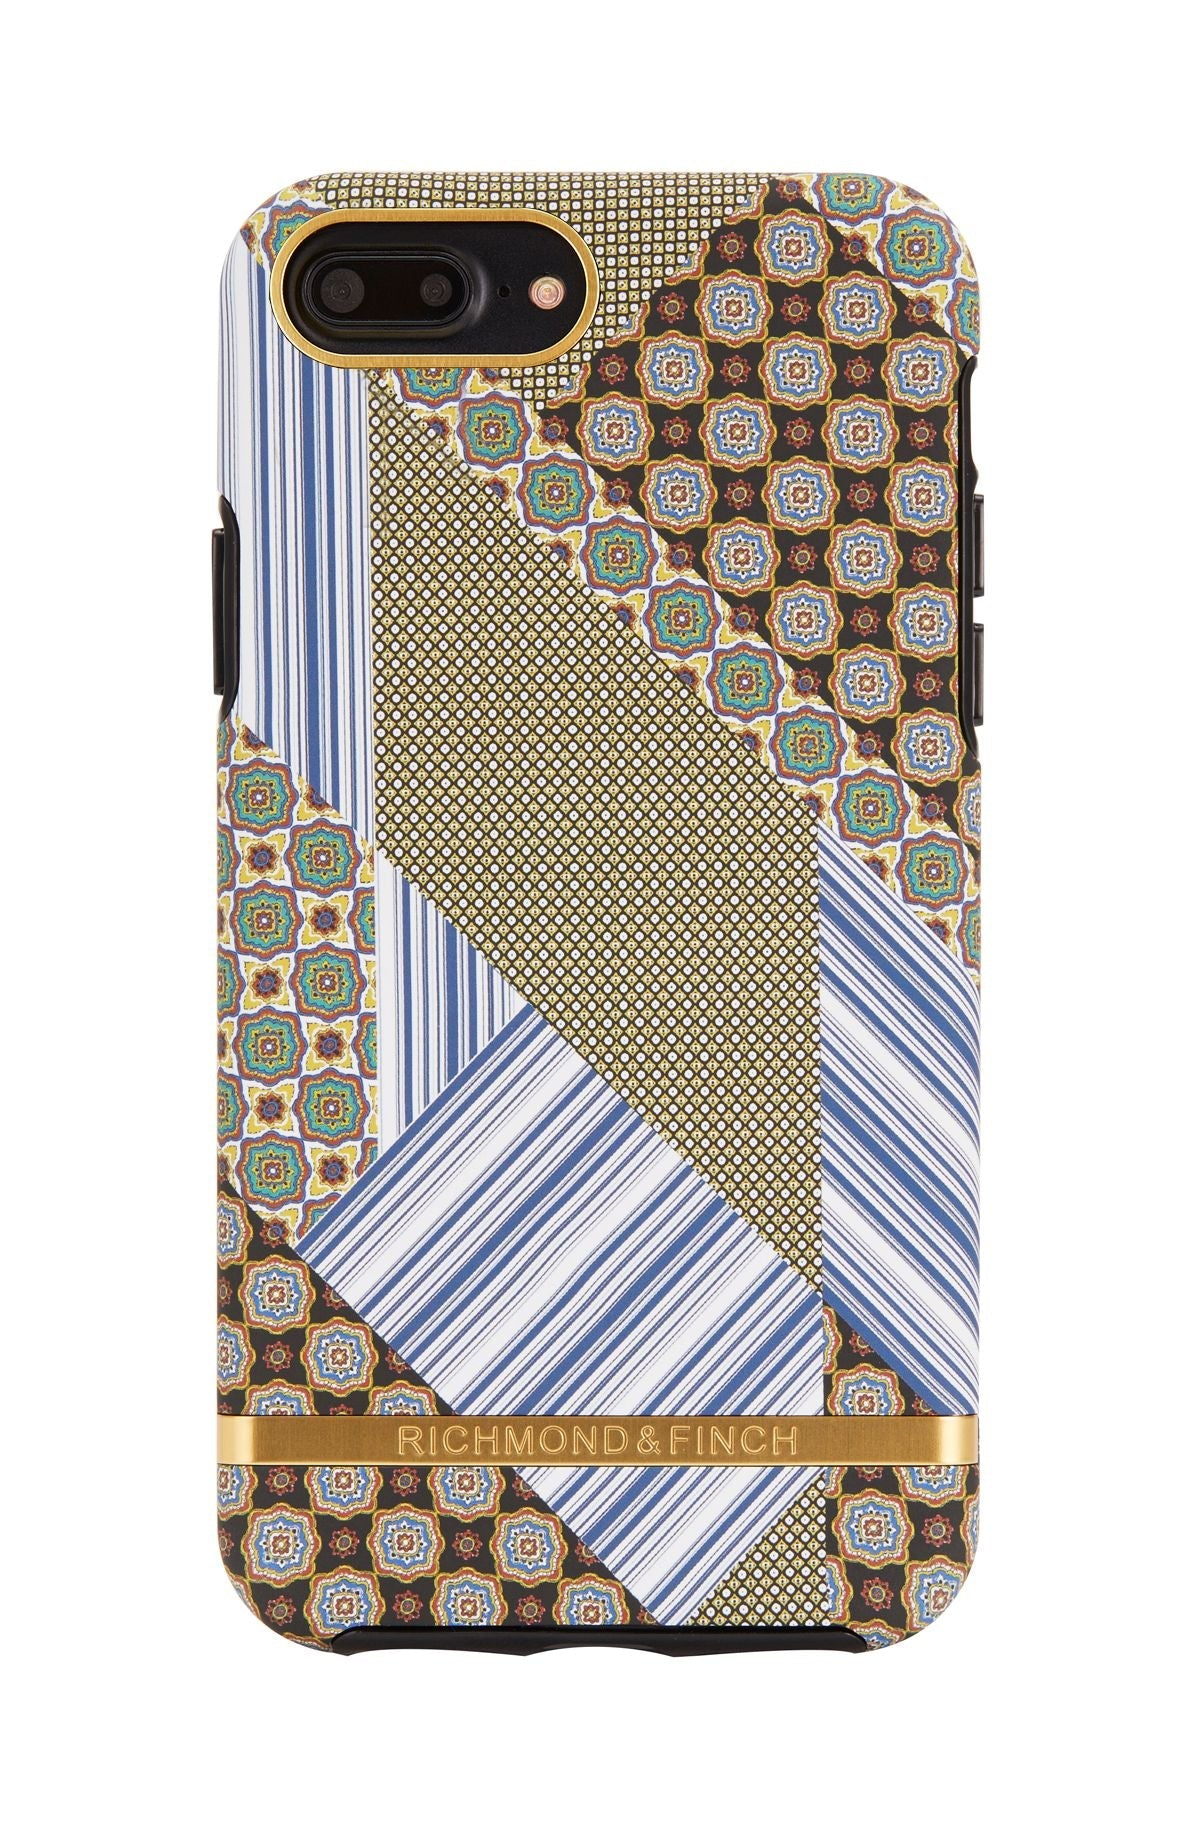 Anzug iPhone FINCH Krawatte, Backcover, iPhone & RICHMOND Apple, & Mehrfarbig 6+/6S+/7+/8+, Tasche